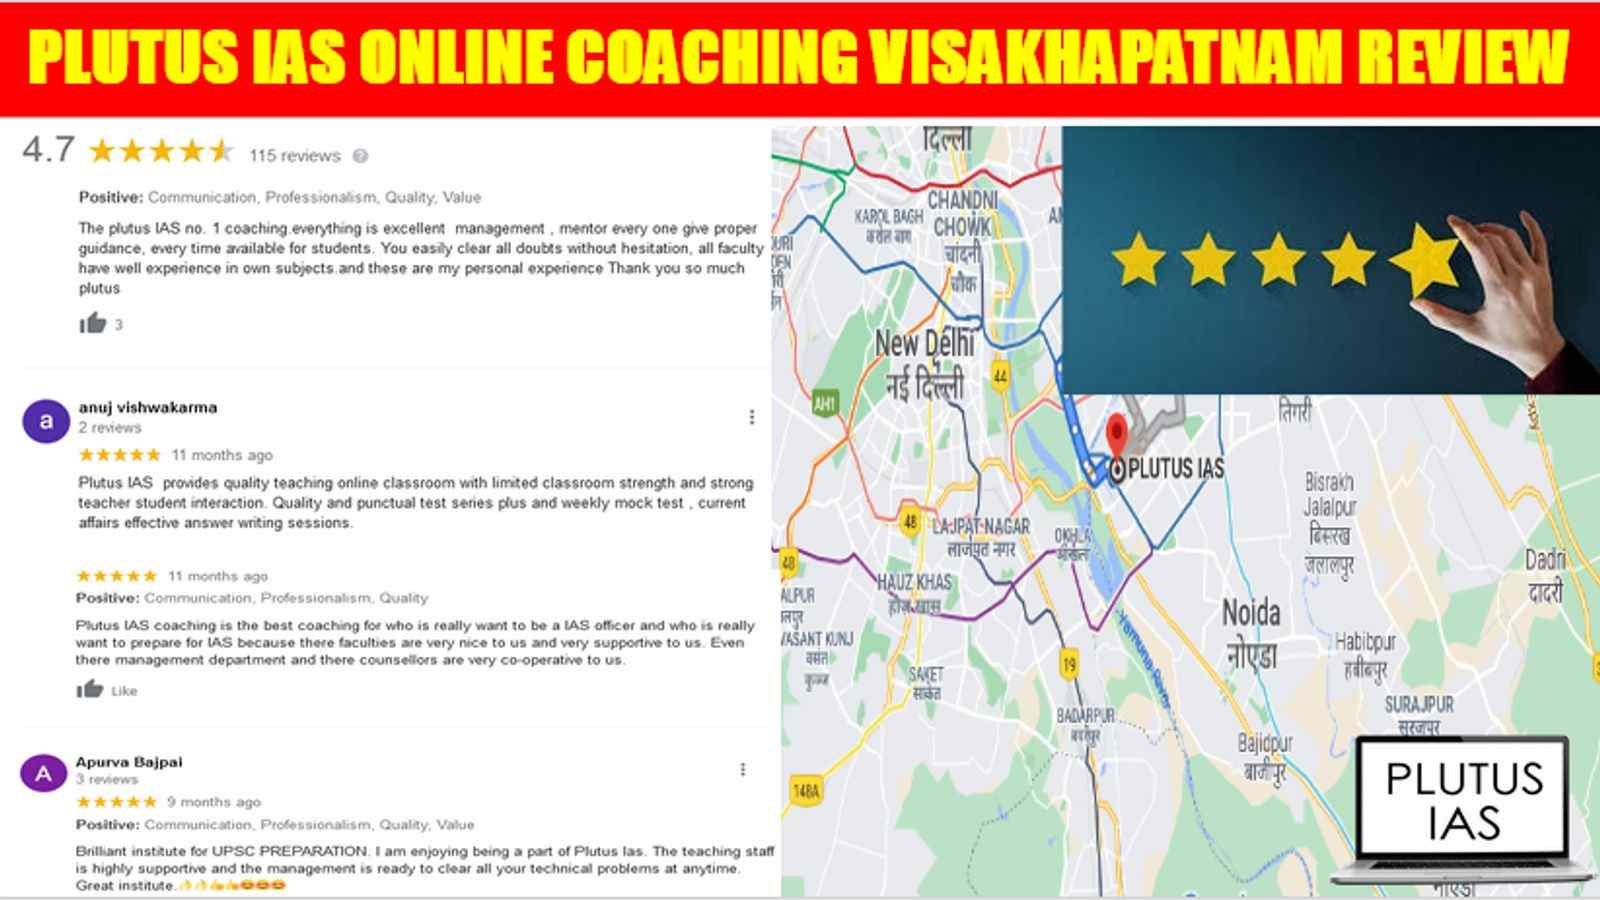 Plutus IAS Online Coaching Visakhapatnam Review